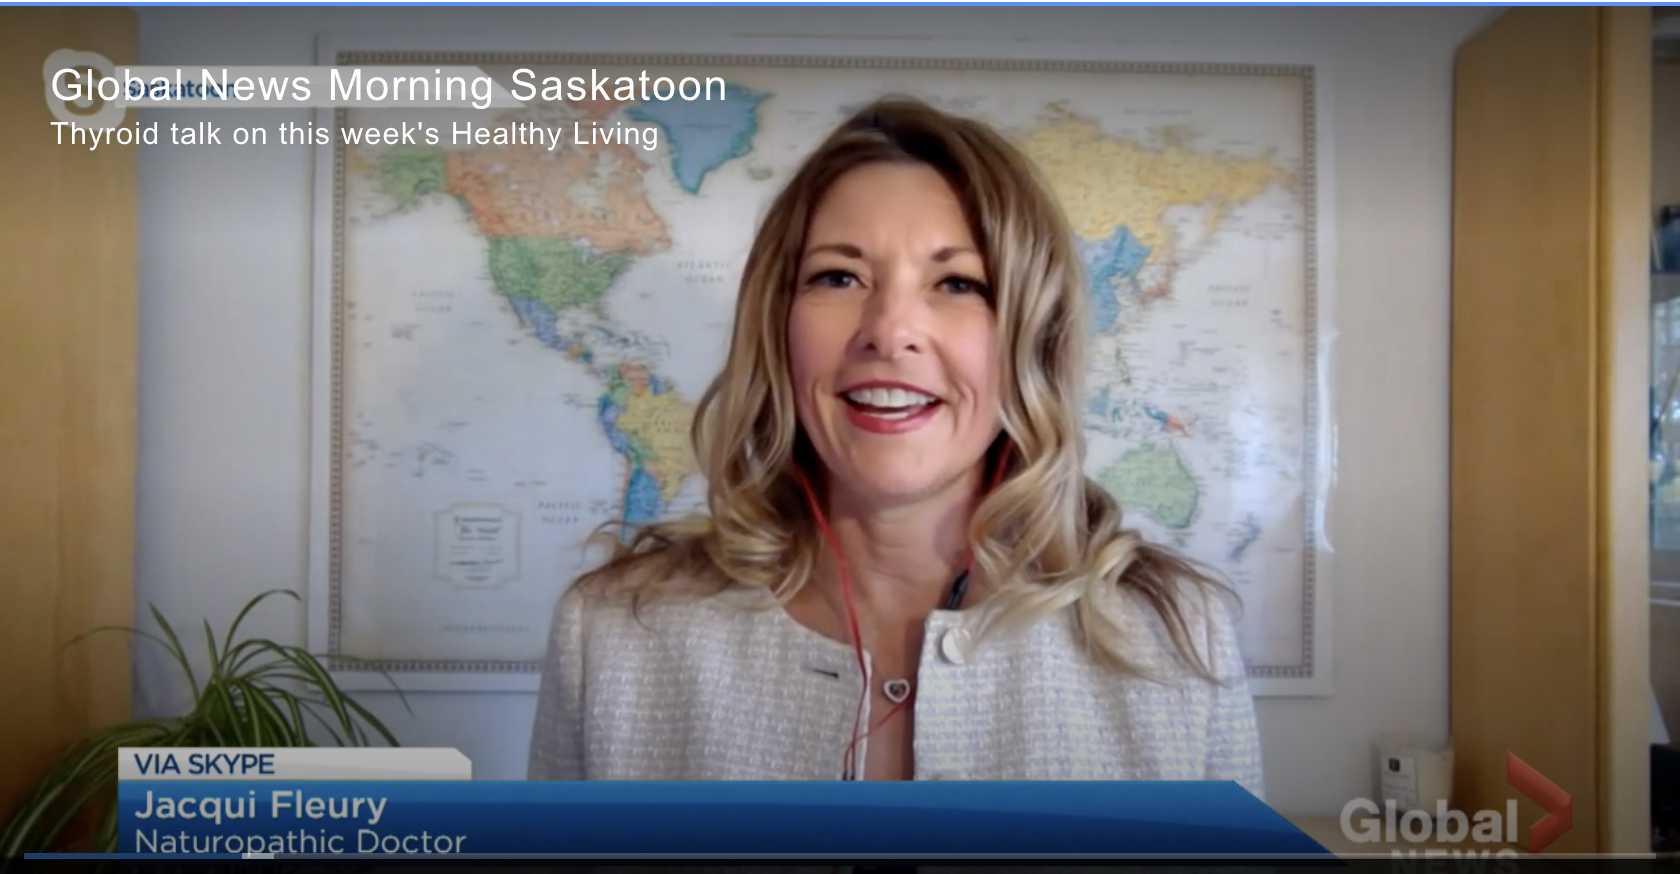 Dr. Jacqui Fleury on Global News Morning Saskatchewan